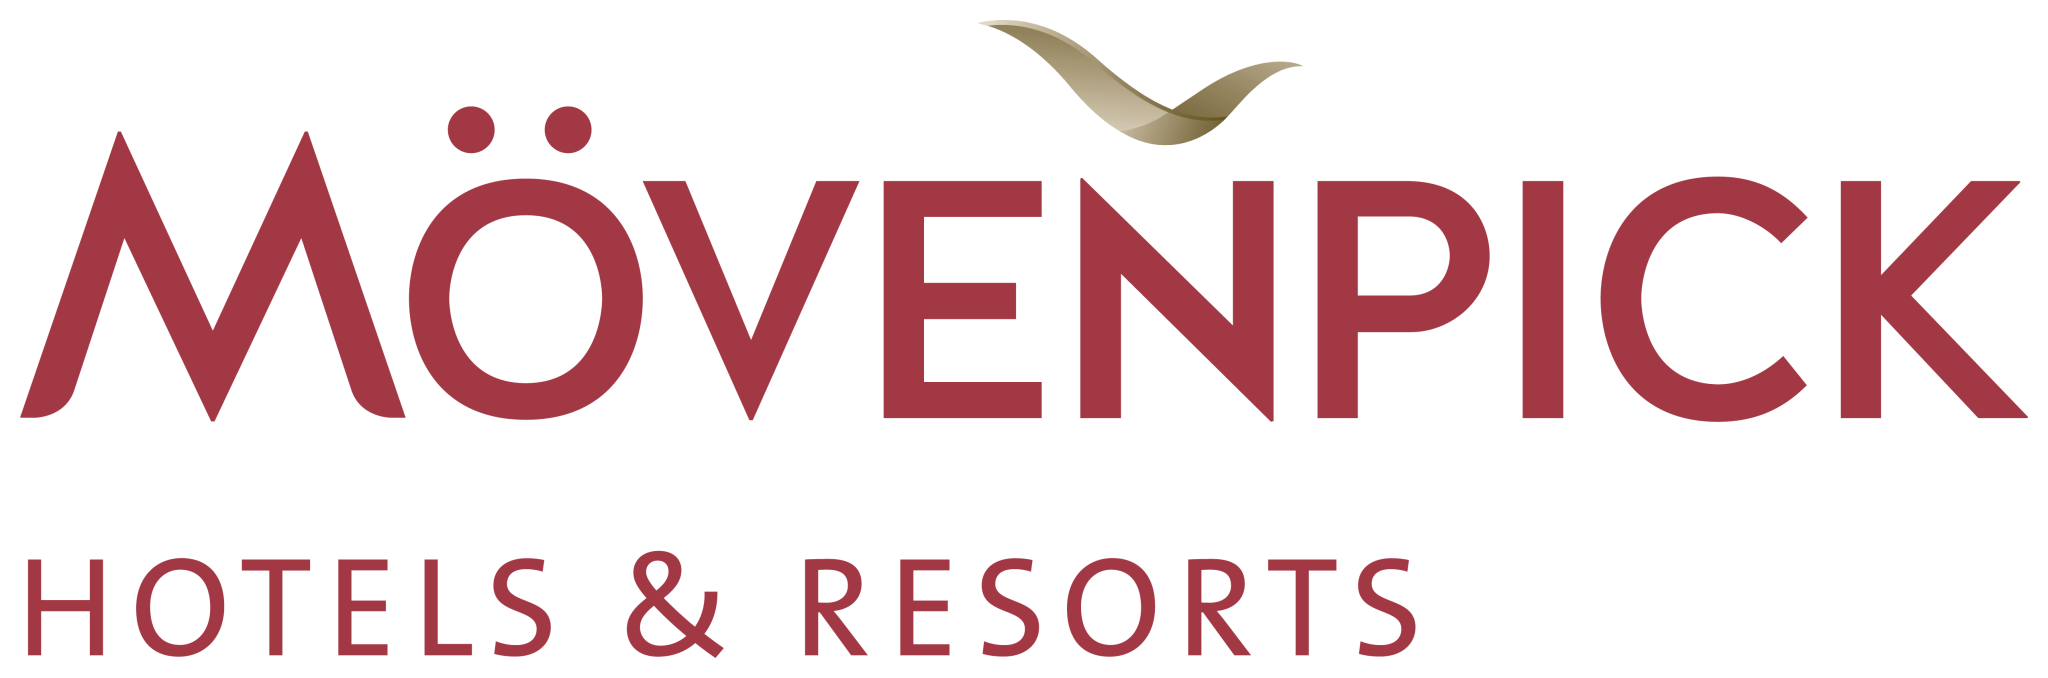 Mövenpick_Hotels_and_Resorts_logo